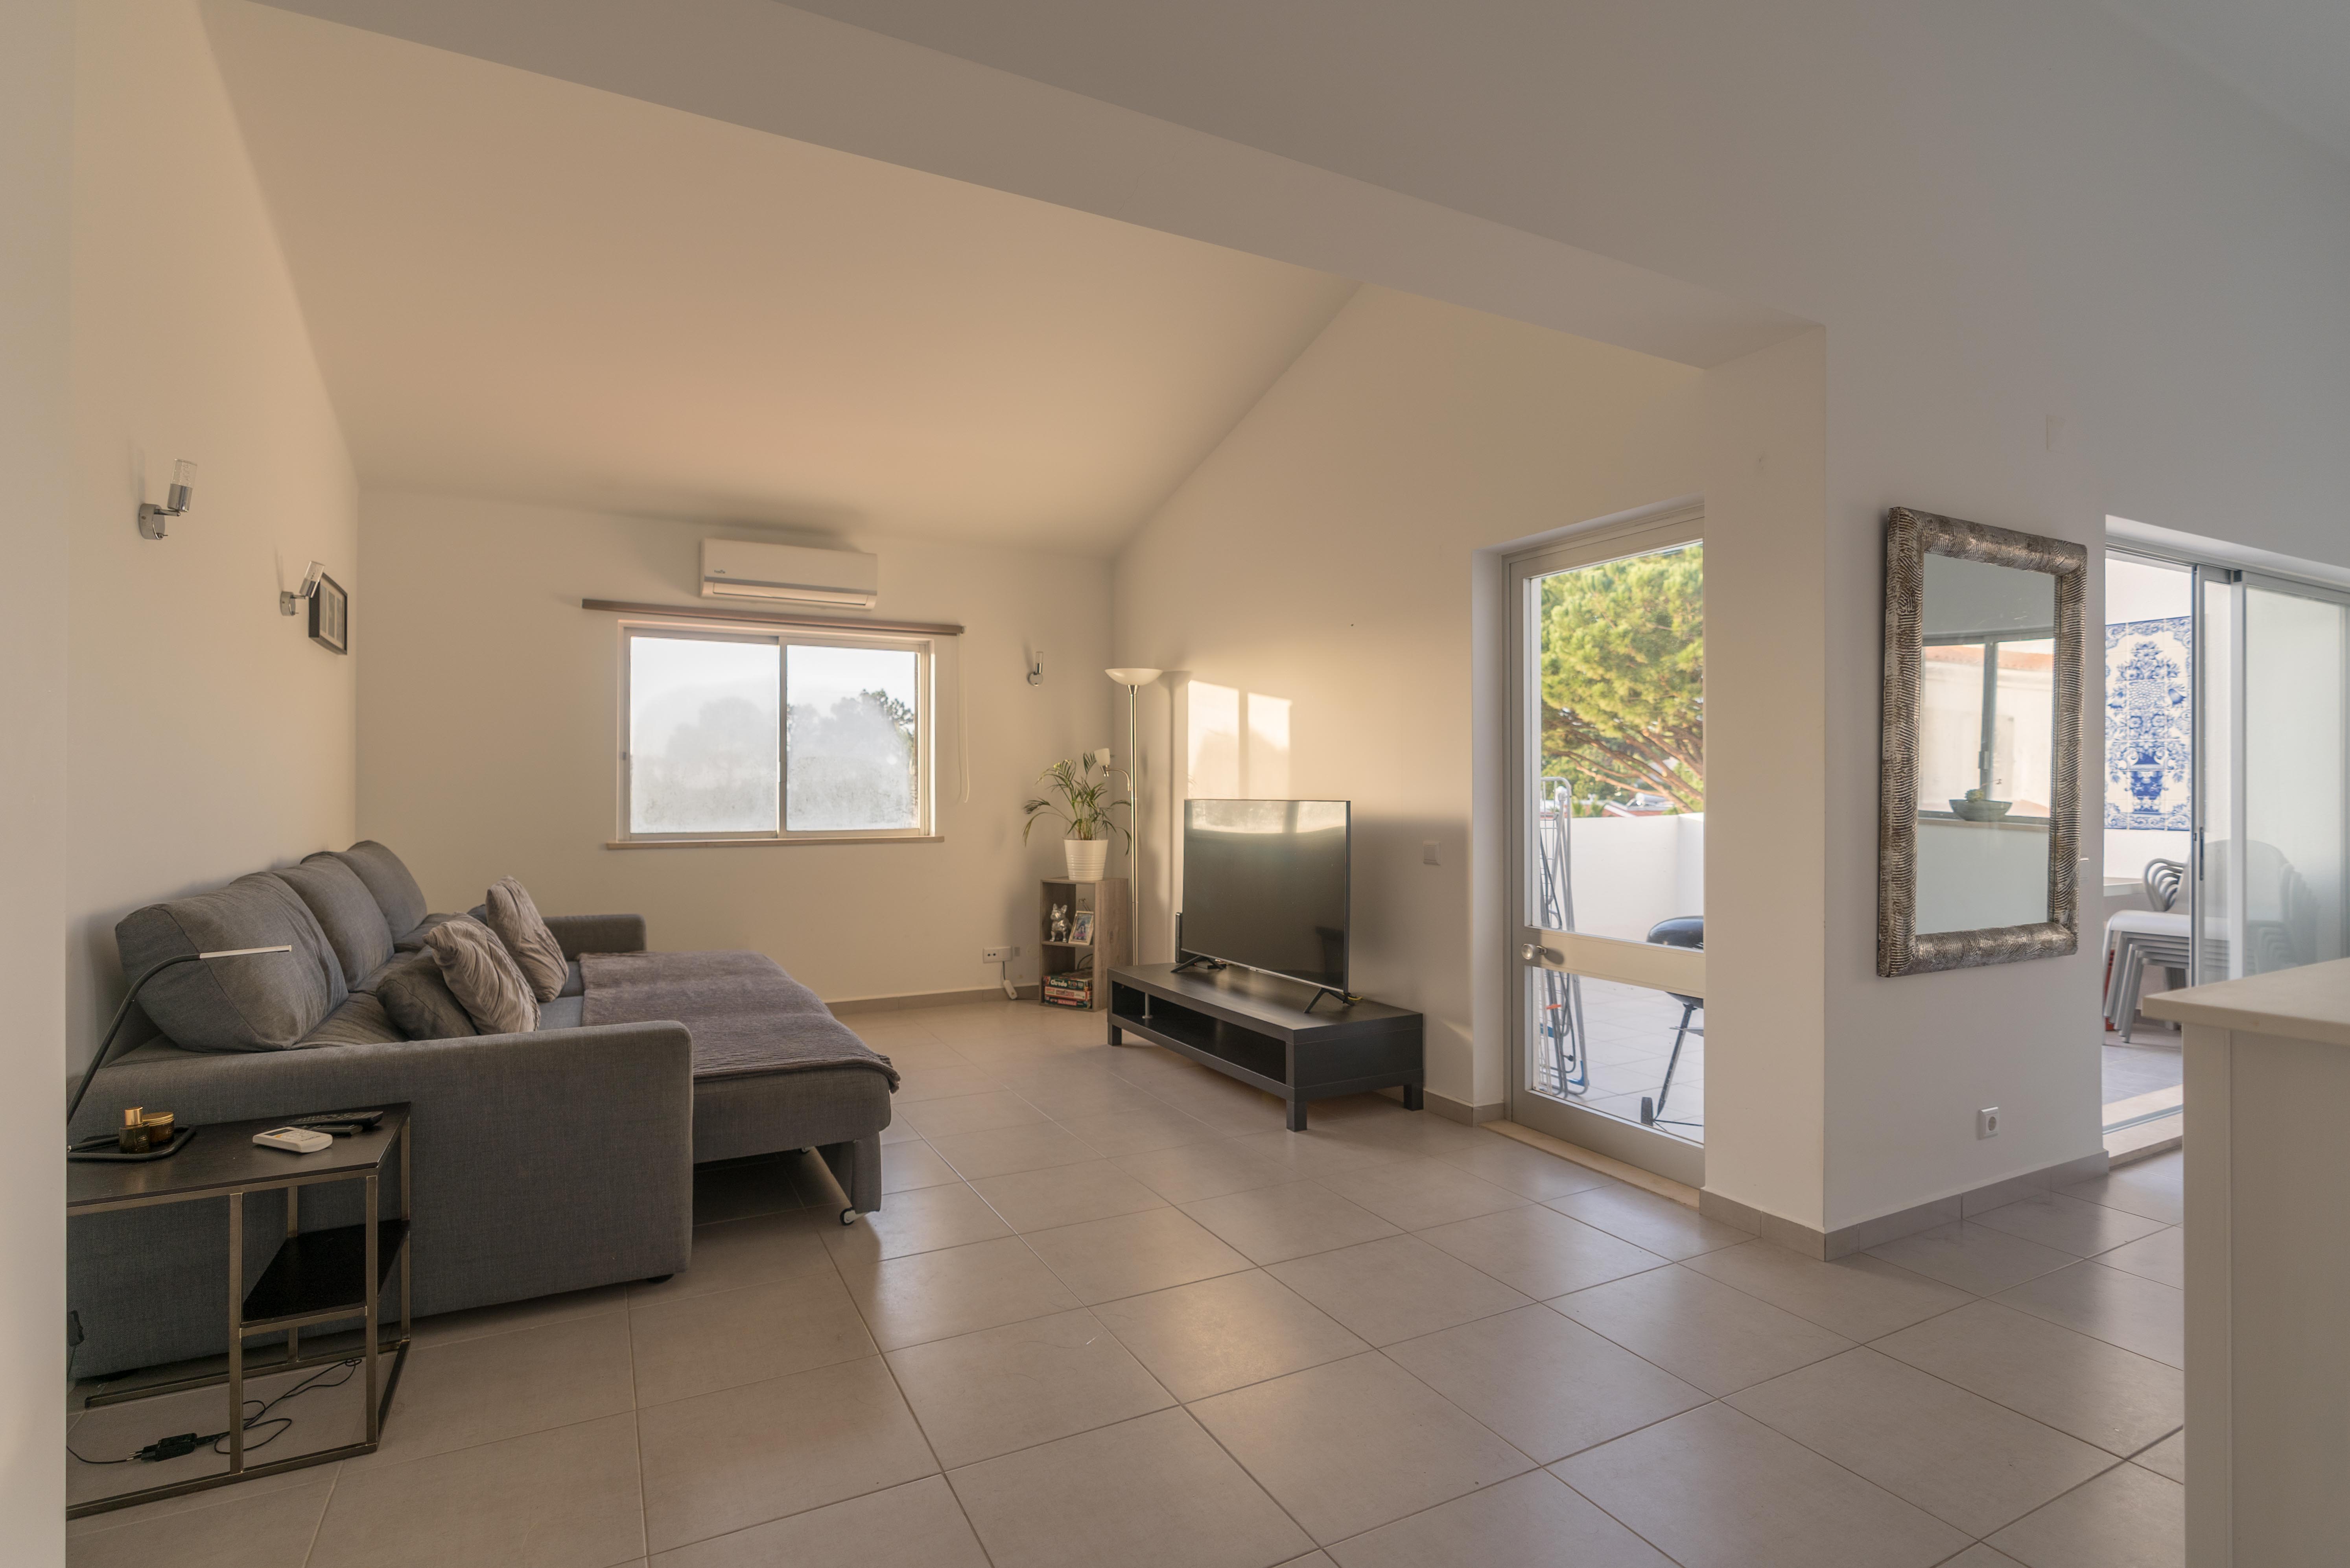 Portugal Algarve Central Vale do Lobo, 3 Bedrooms Bedrooms, ,3 BathroomsBathrooms,Apartment,For sale,Av. de Flórida,20252